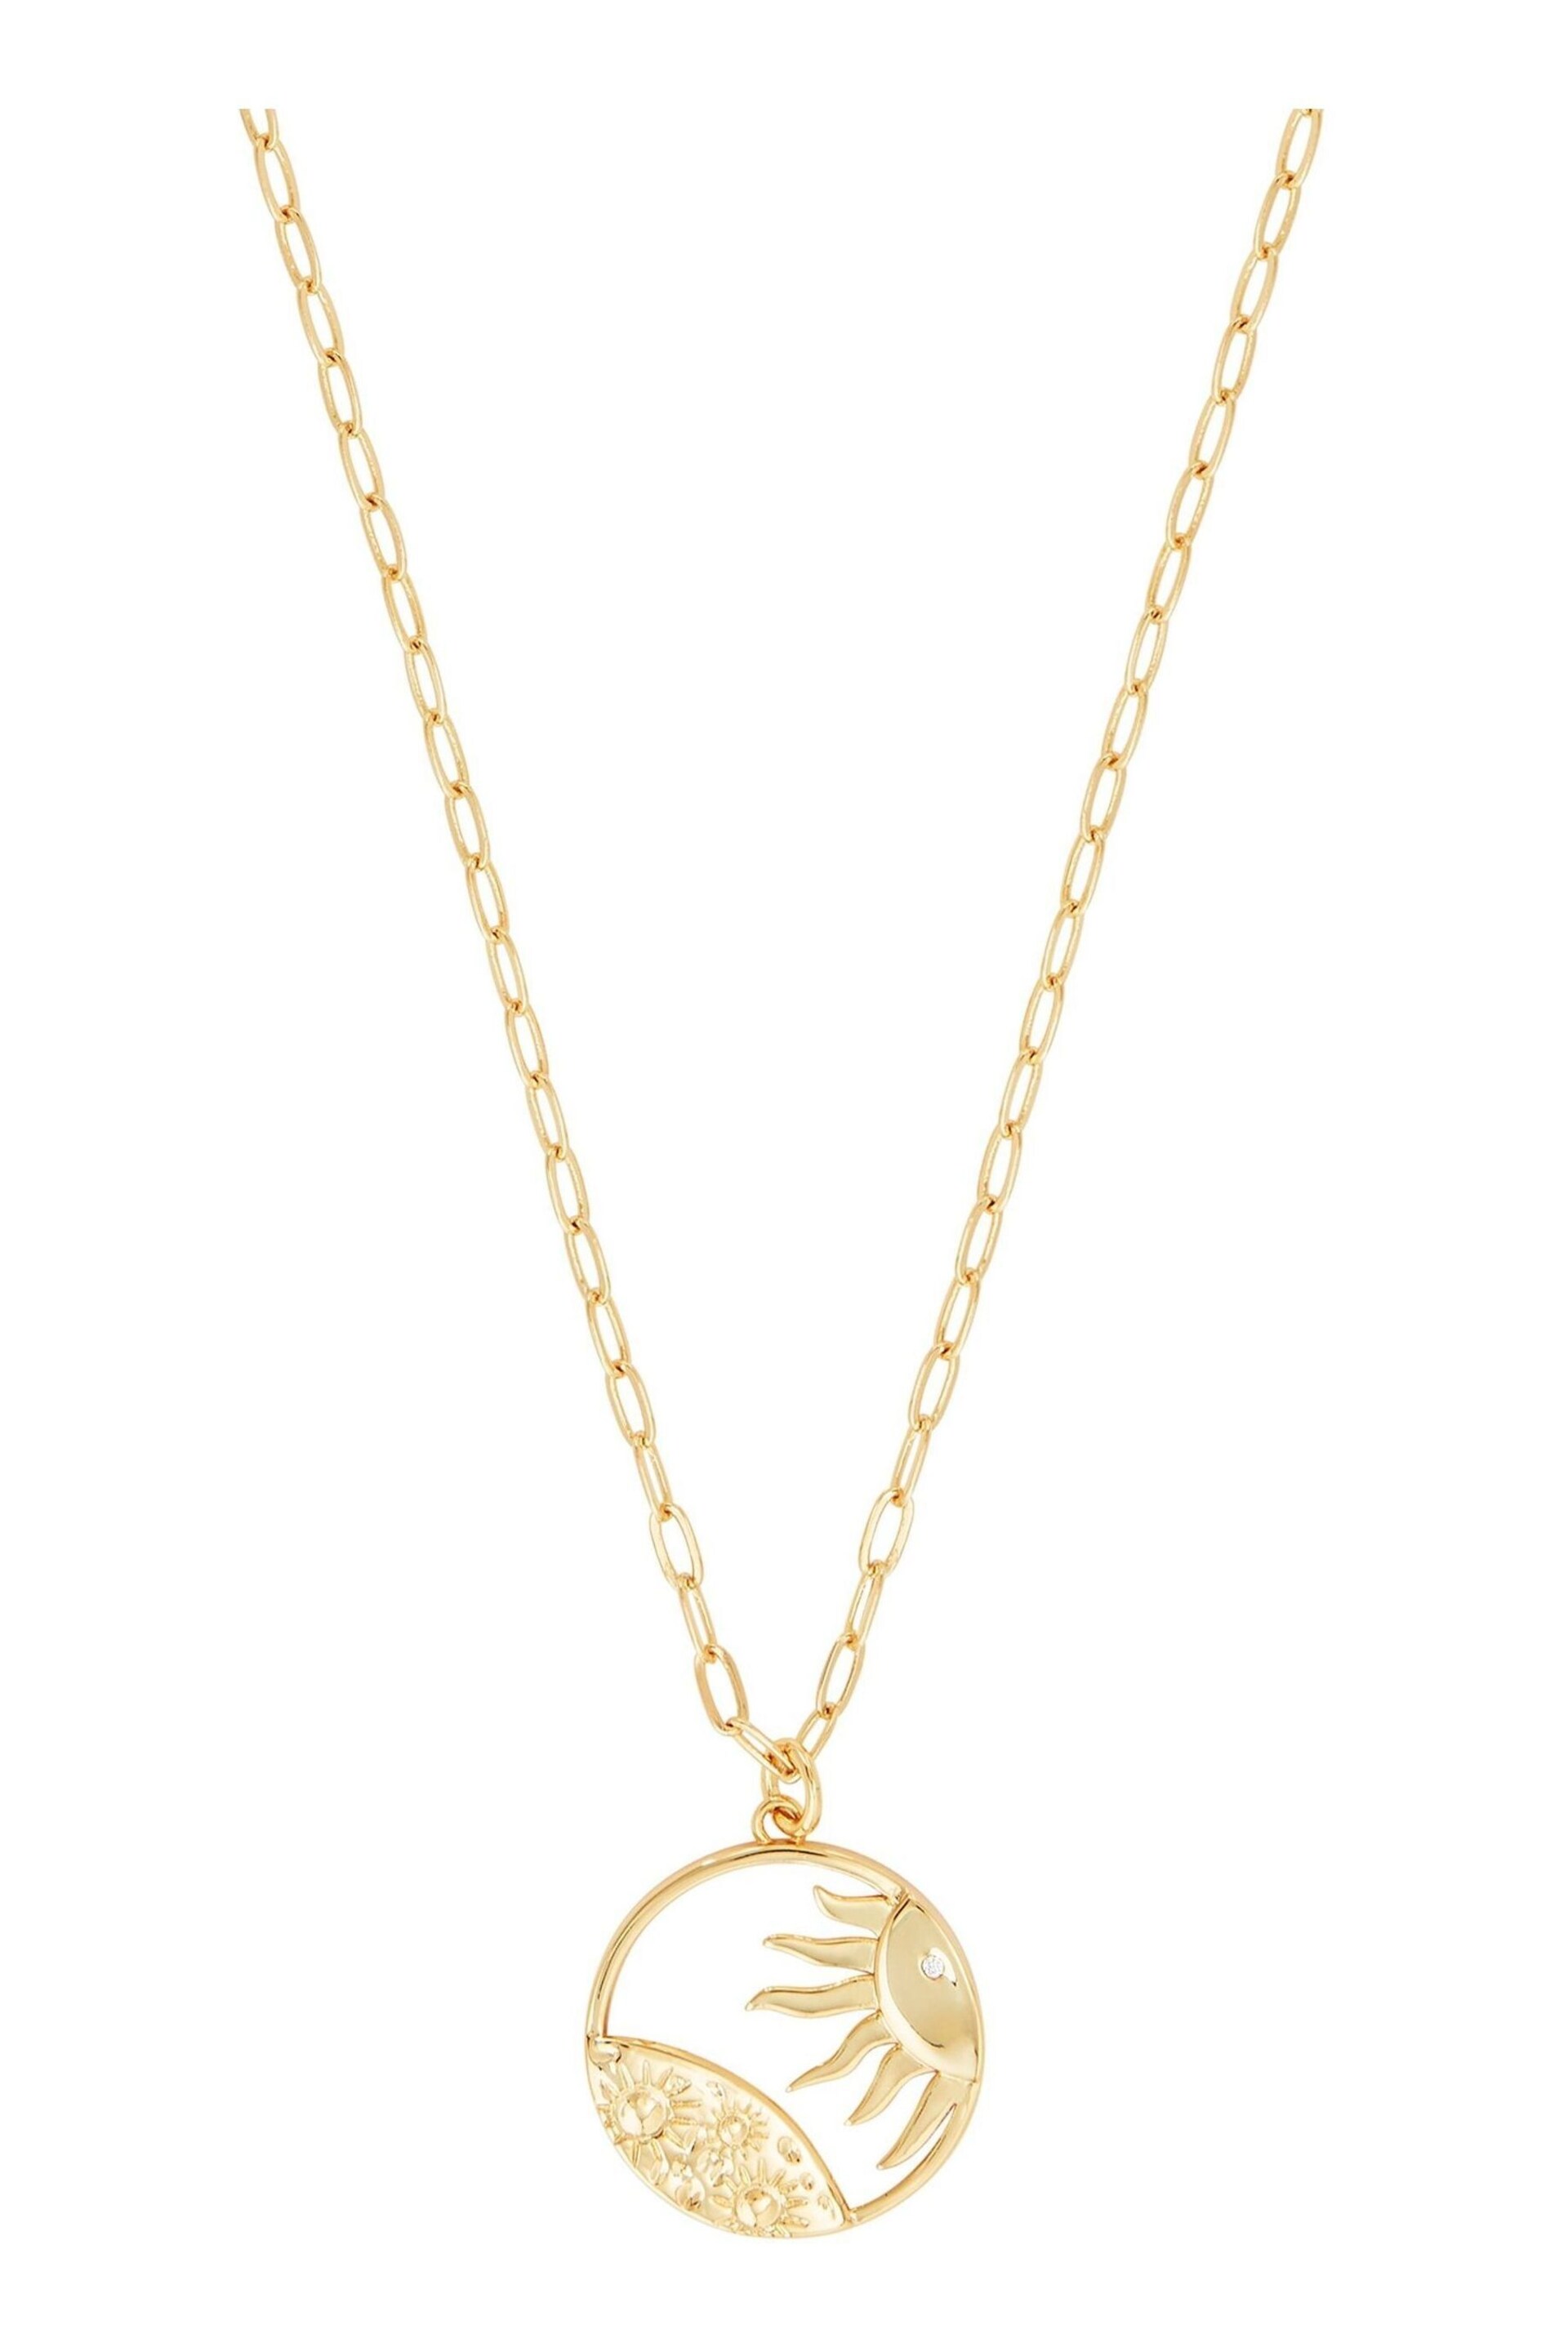 Celeste Starre Gold Tone Lunar Eclipse Necklace - Image 2 of 3